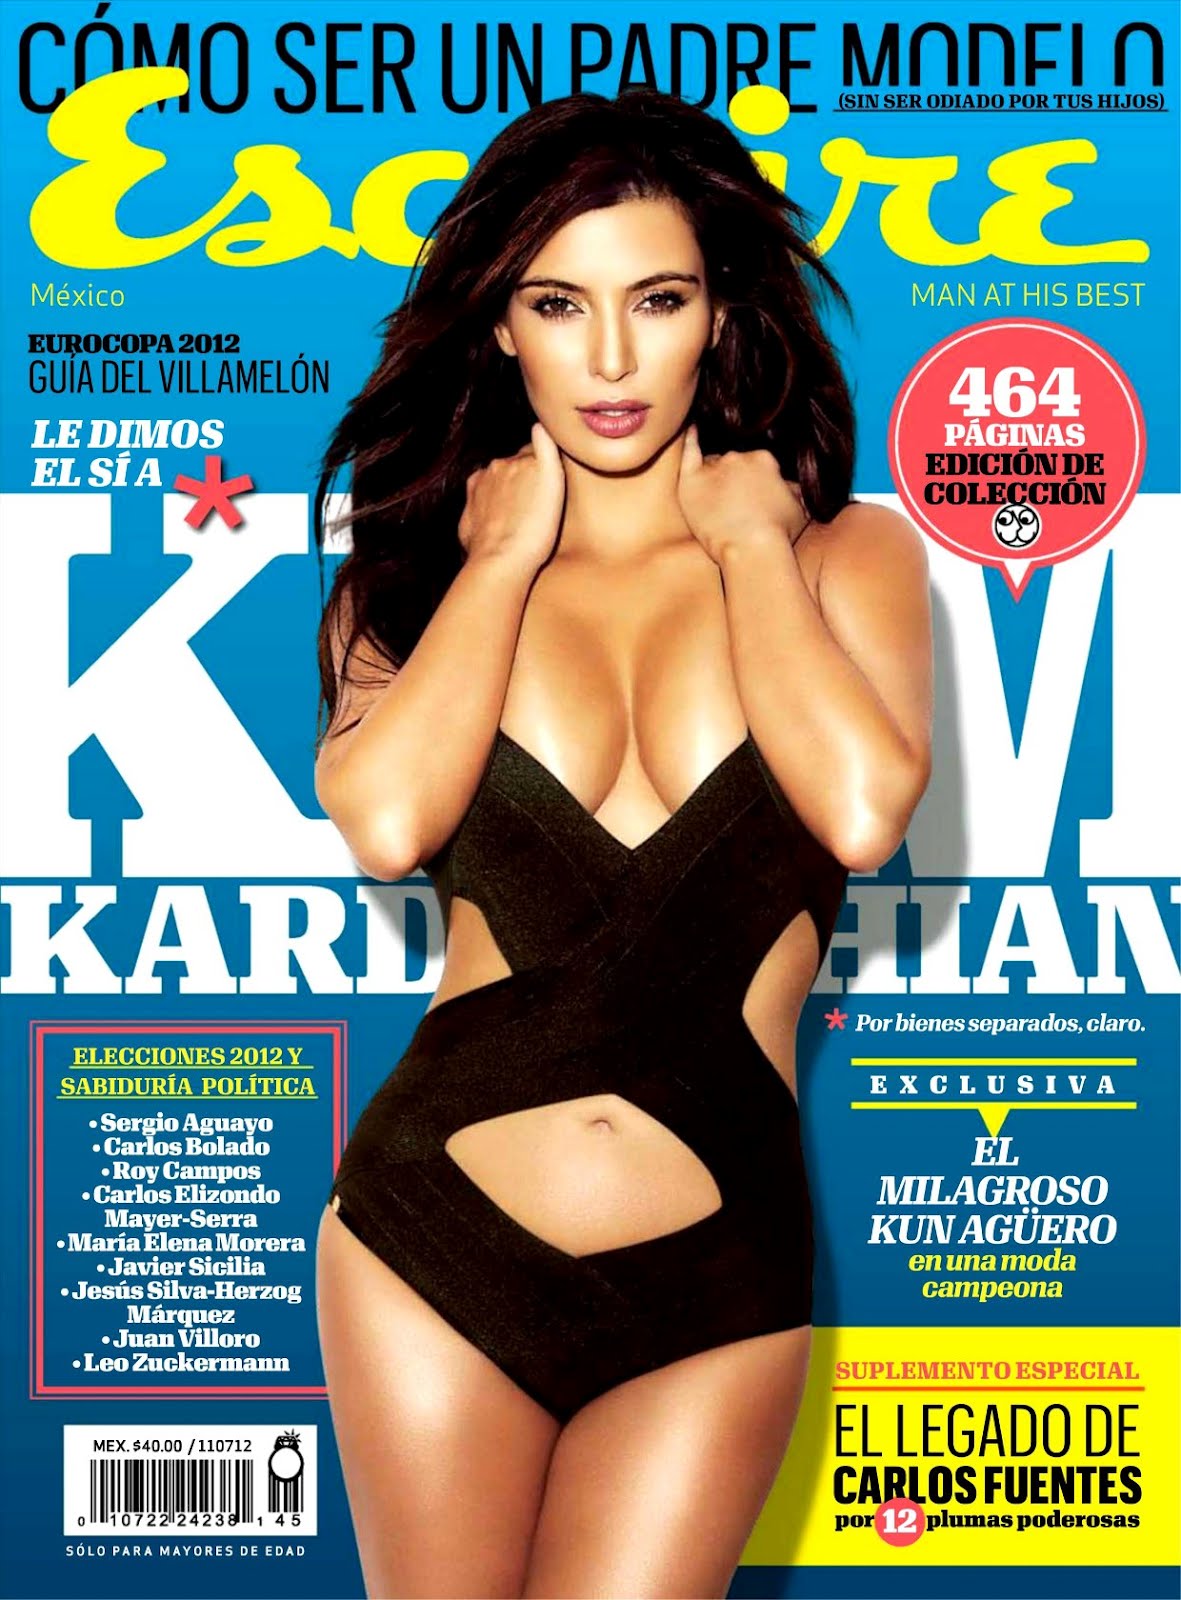 http://1.bp.blogspot.com/-y5v3CJSXpjQ/T99wjEuv2aI/AAAAAAAAHOg/-mAgAO1XI2o/s1600/Kim-Kardashian-12.jpg